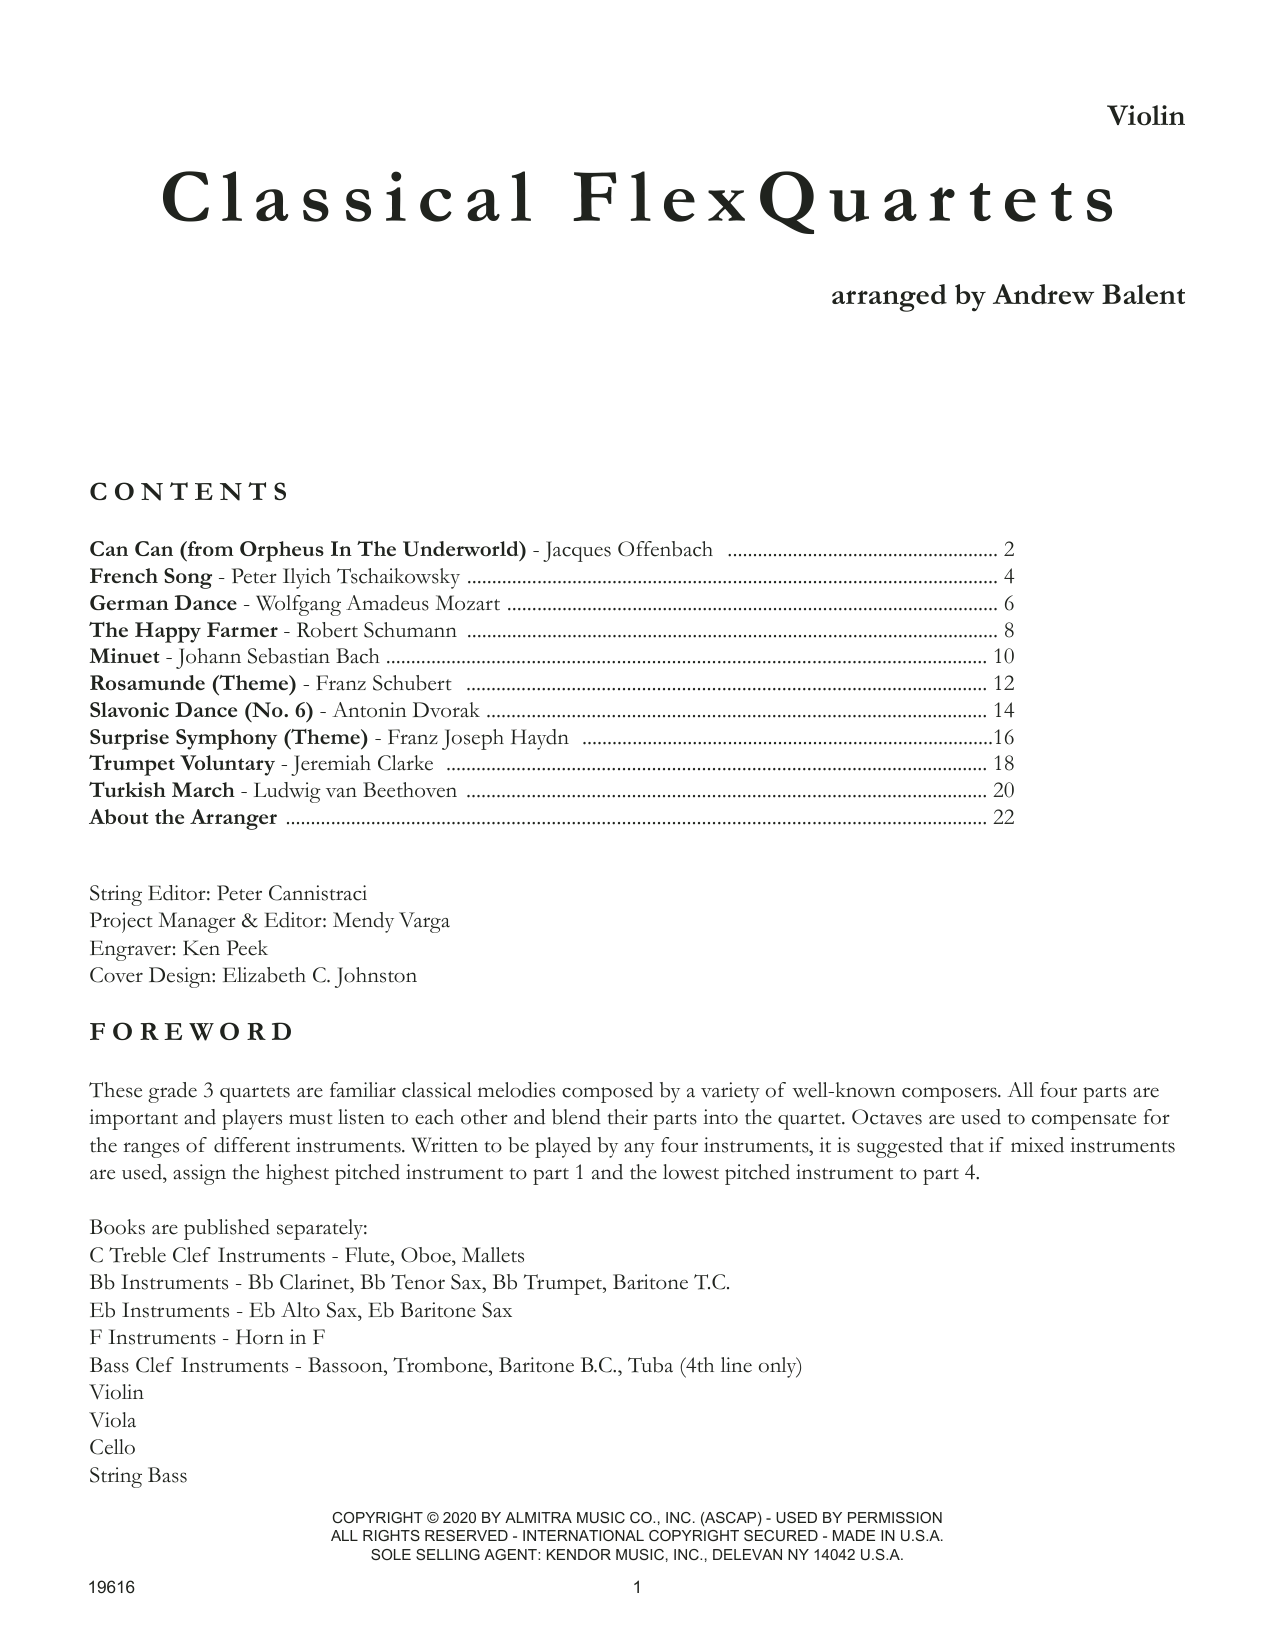 Download Various Classical Flexquartets (arr. Andrew Bal Sheet Music